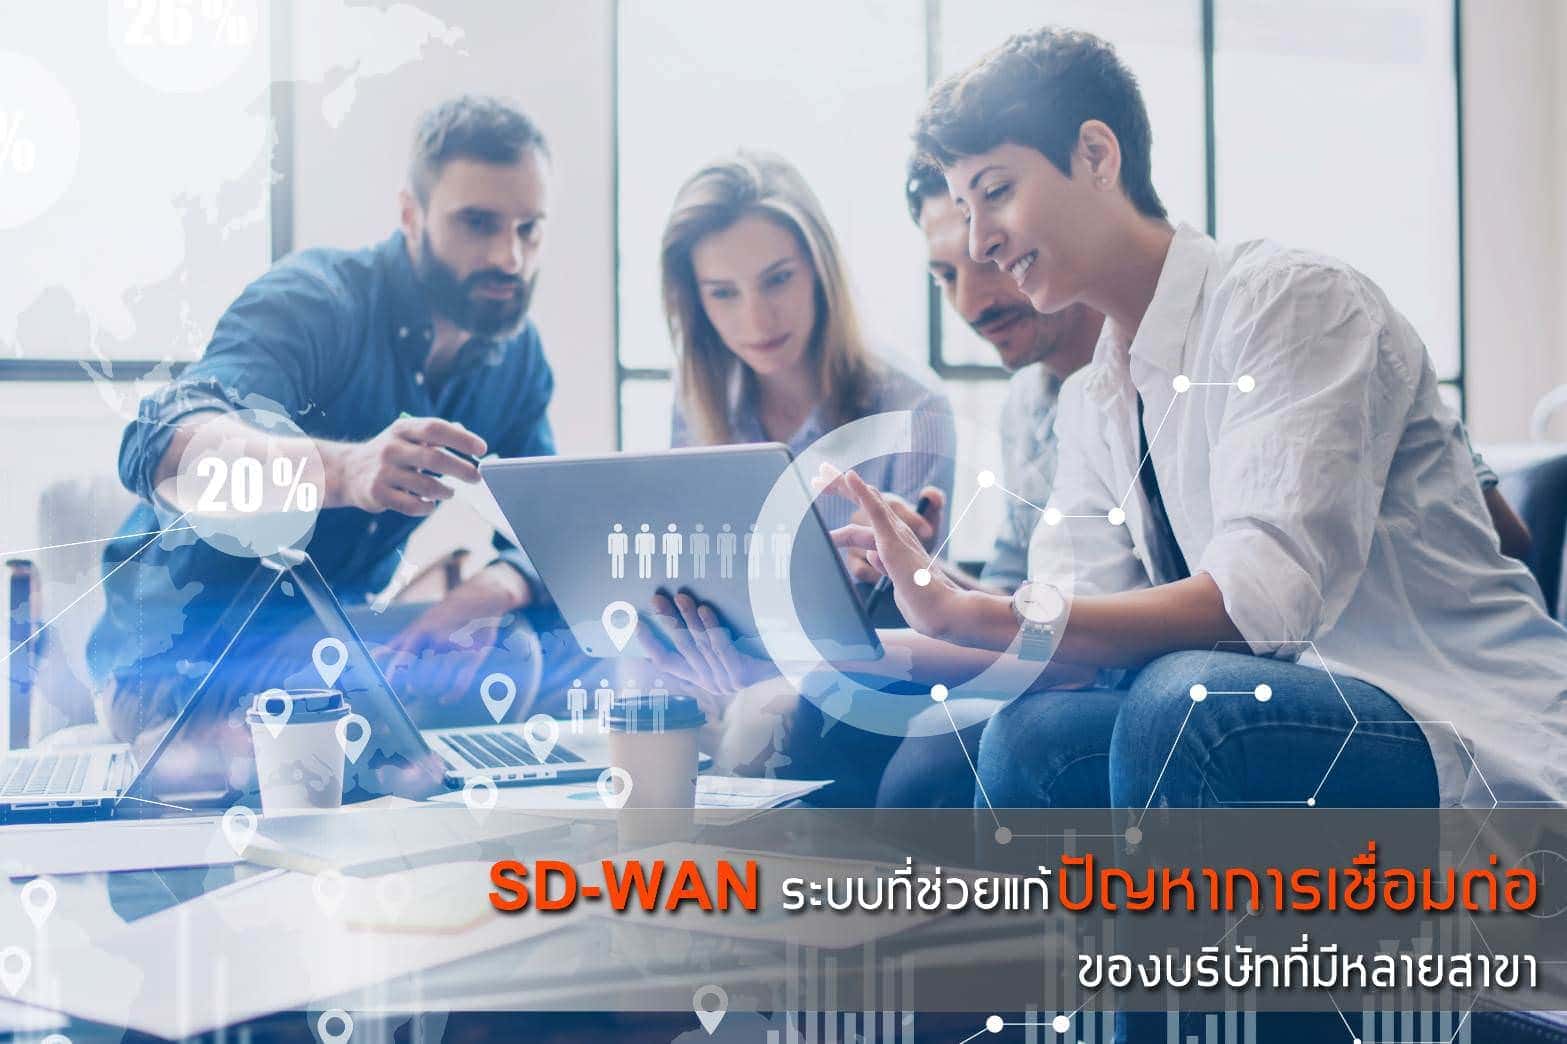 SD-WAN ระบบที่ช่วยแก้ปัญหาการเชื่อมต่อของบริษัทที่มีหลายสาขา 7